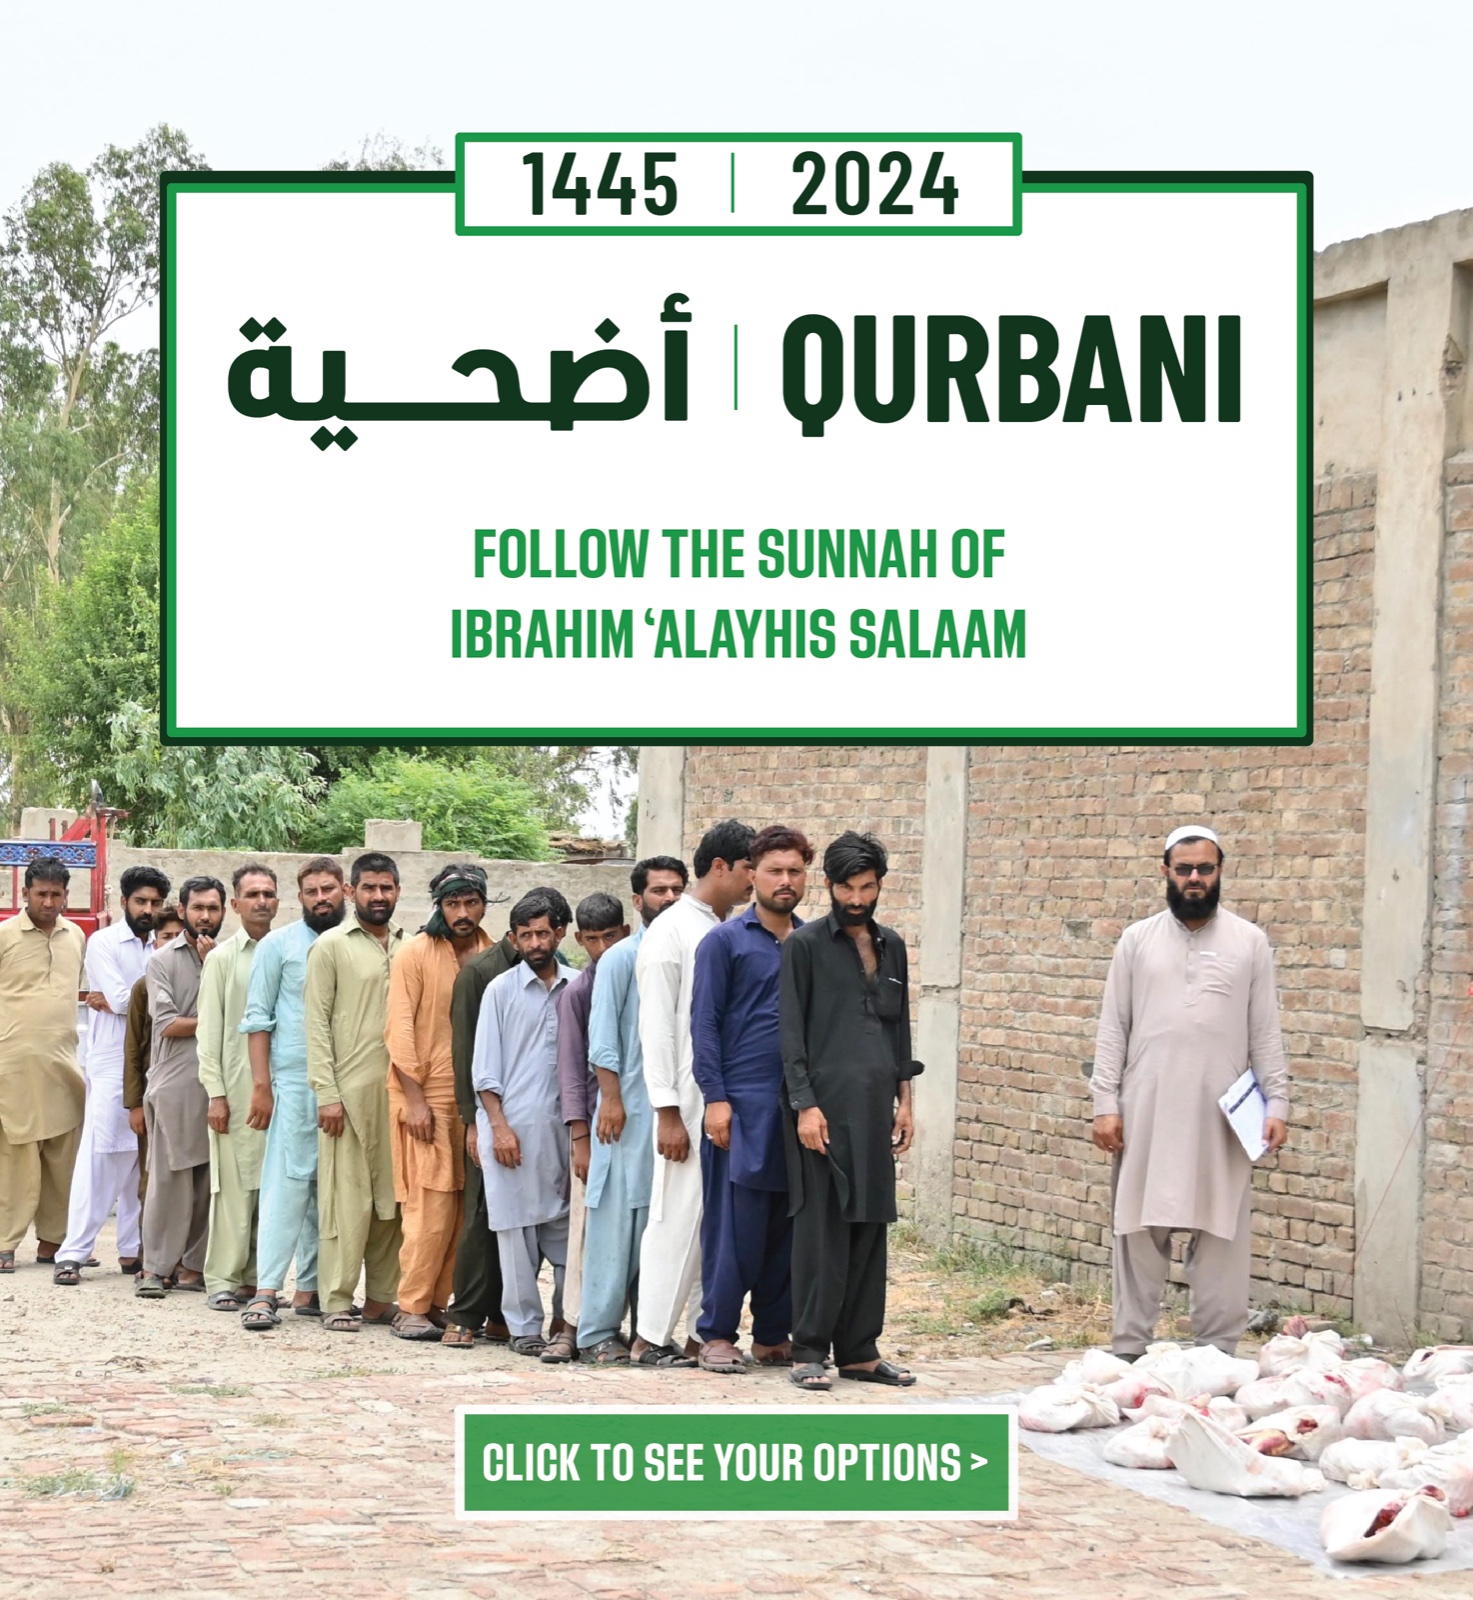 Additional image for Qurbani 2024